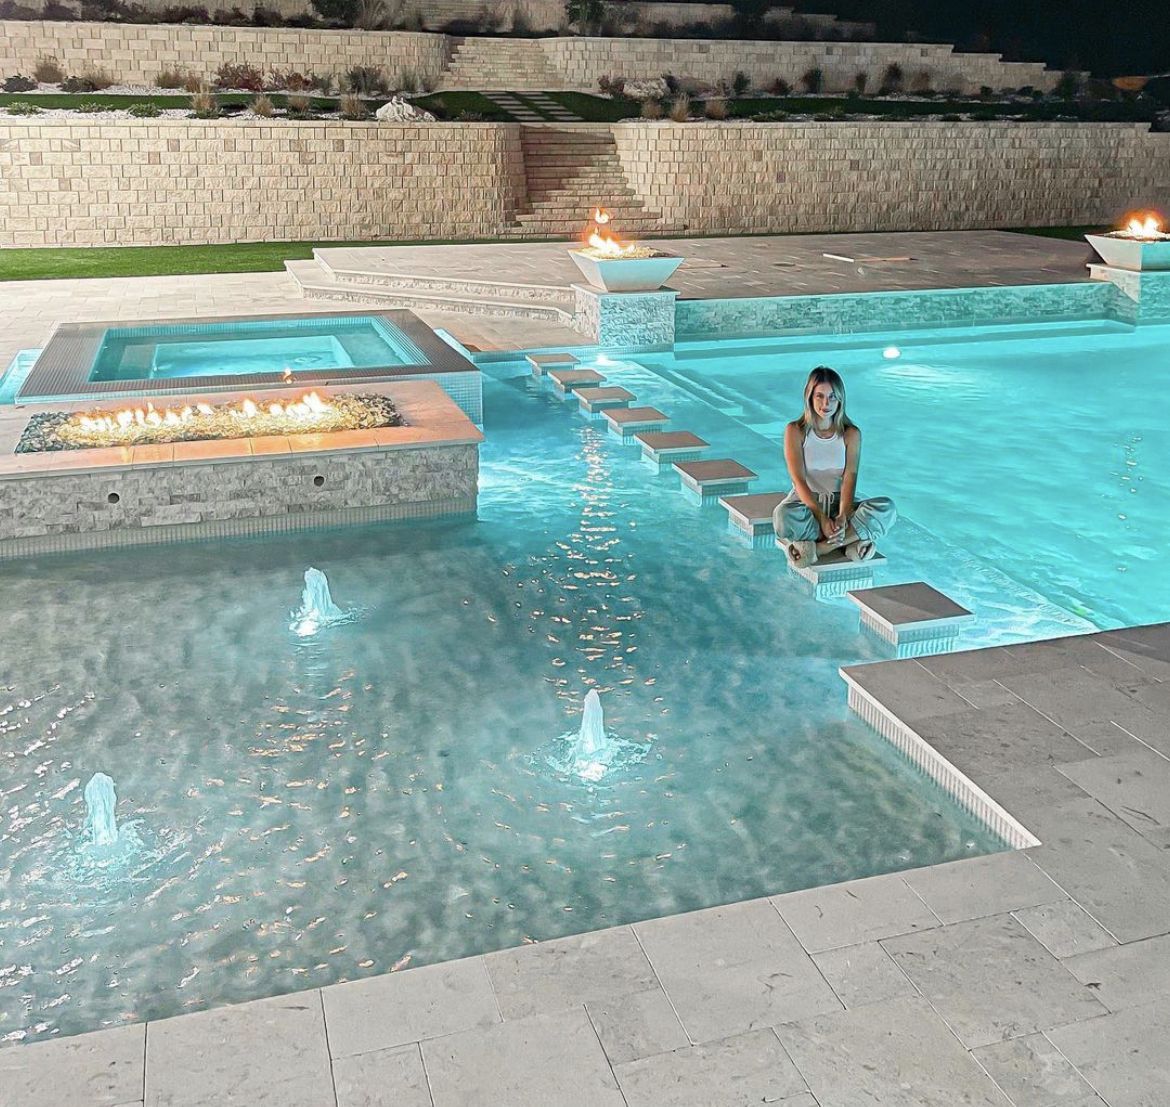 Trendy Home Swimming Pool Ideas